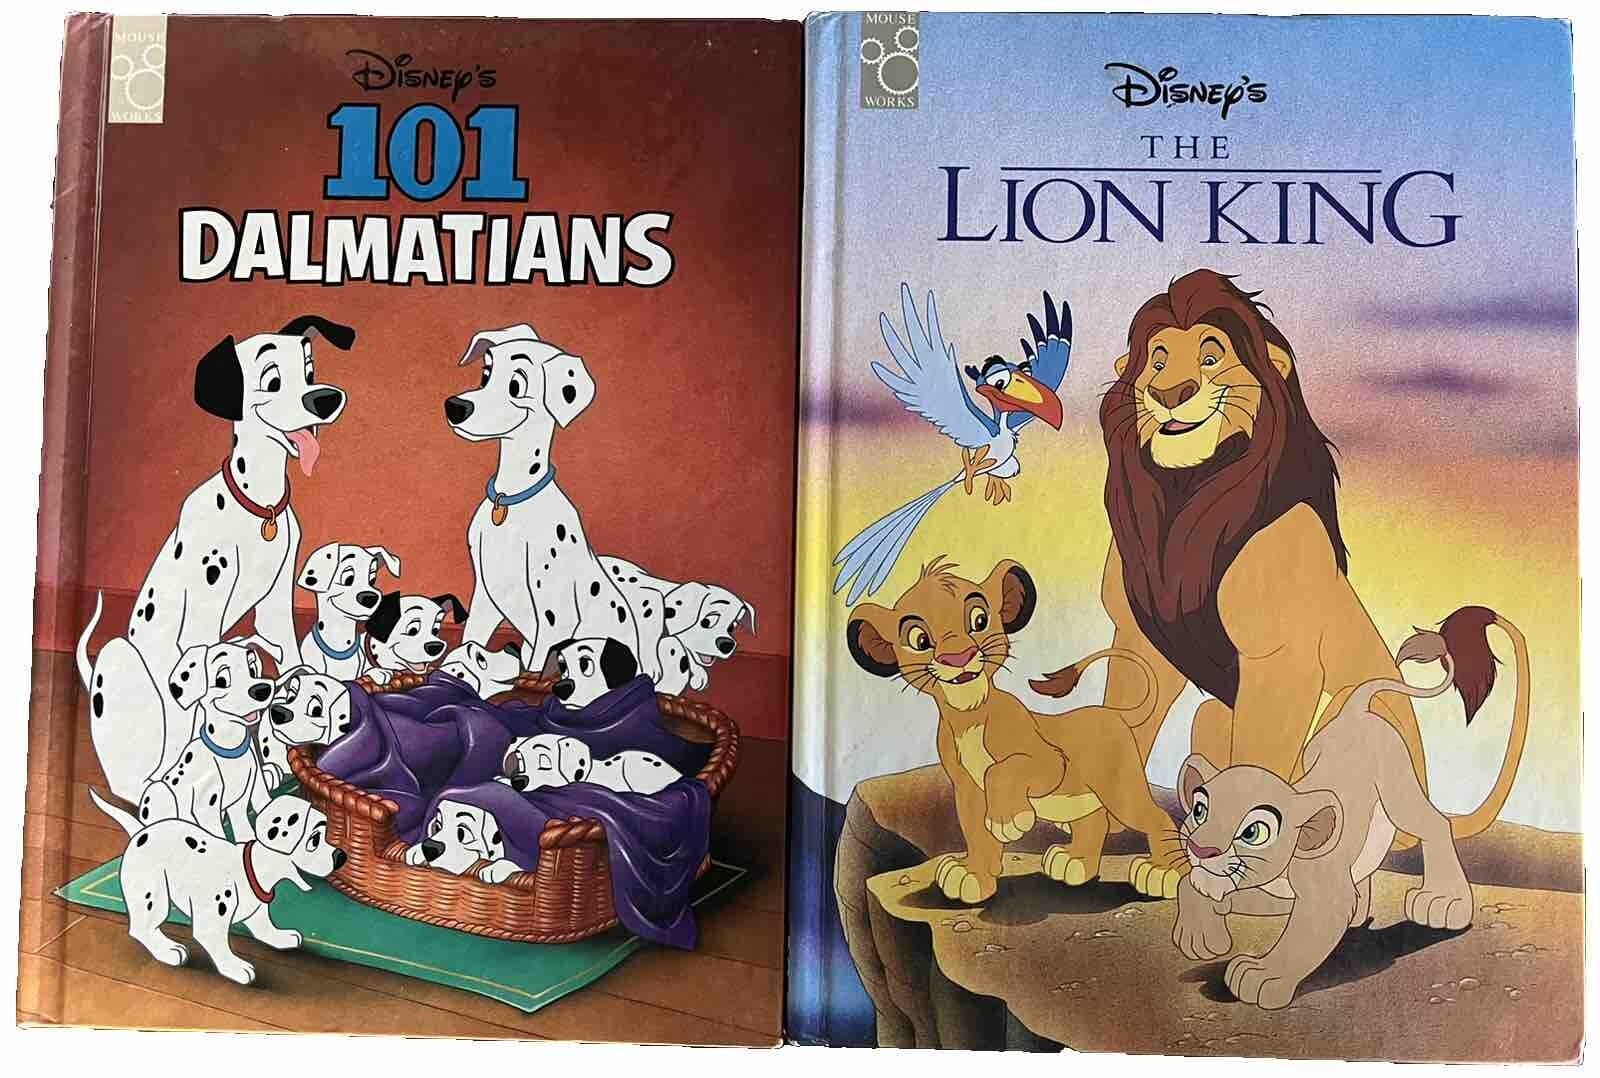 Lot of 2 Disney Mouse Works Books: 101 DALMATIANS & THE LION KING